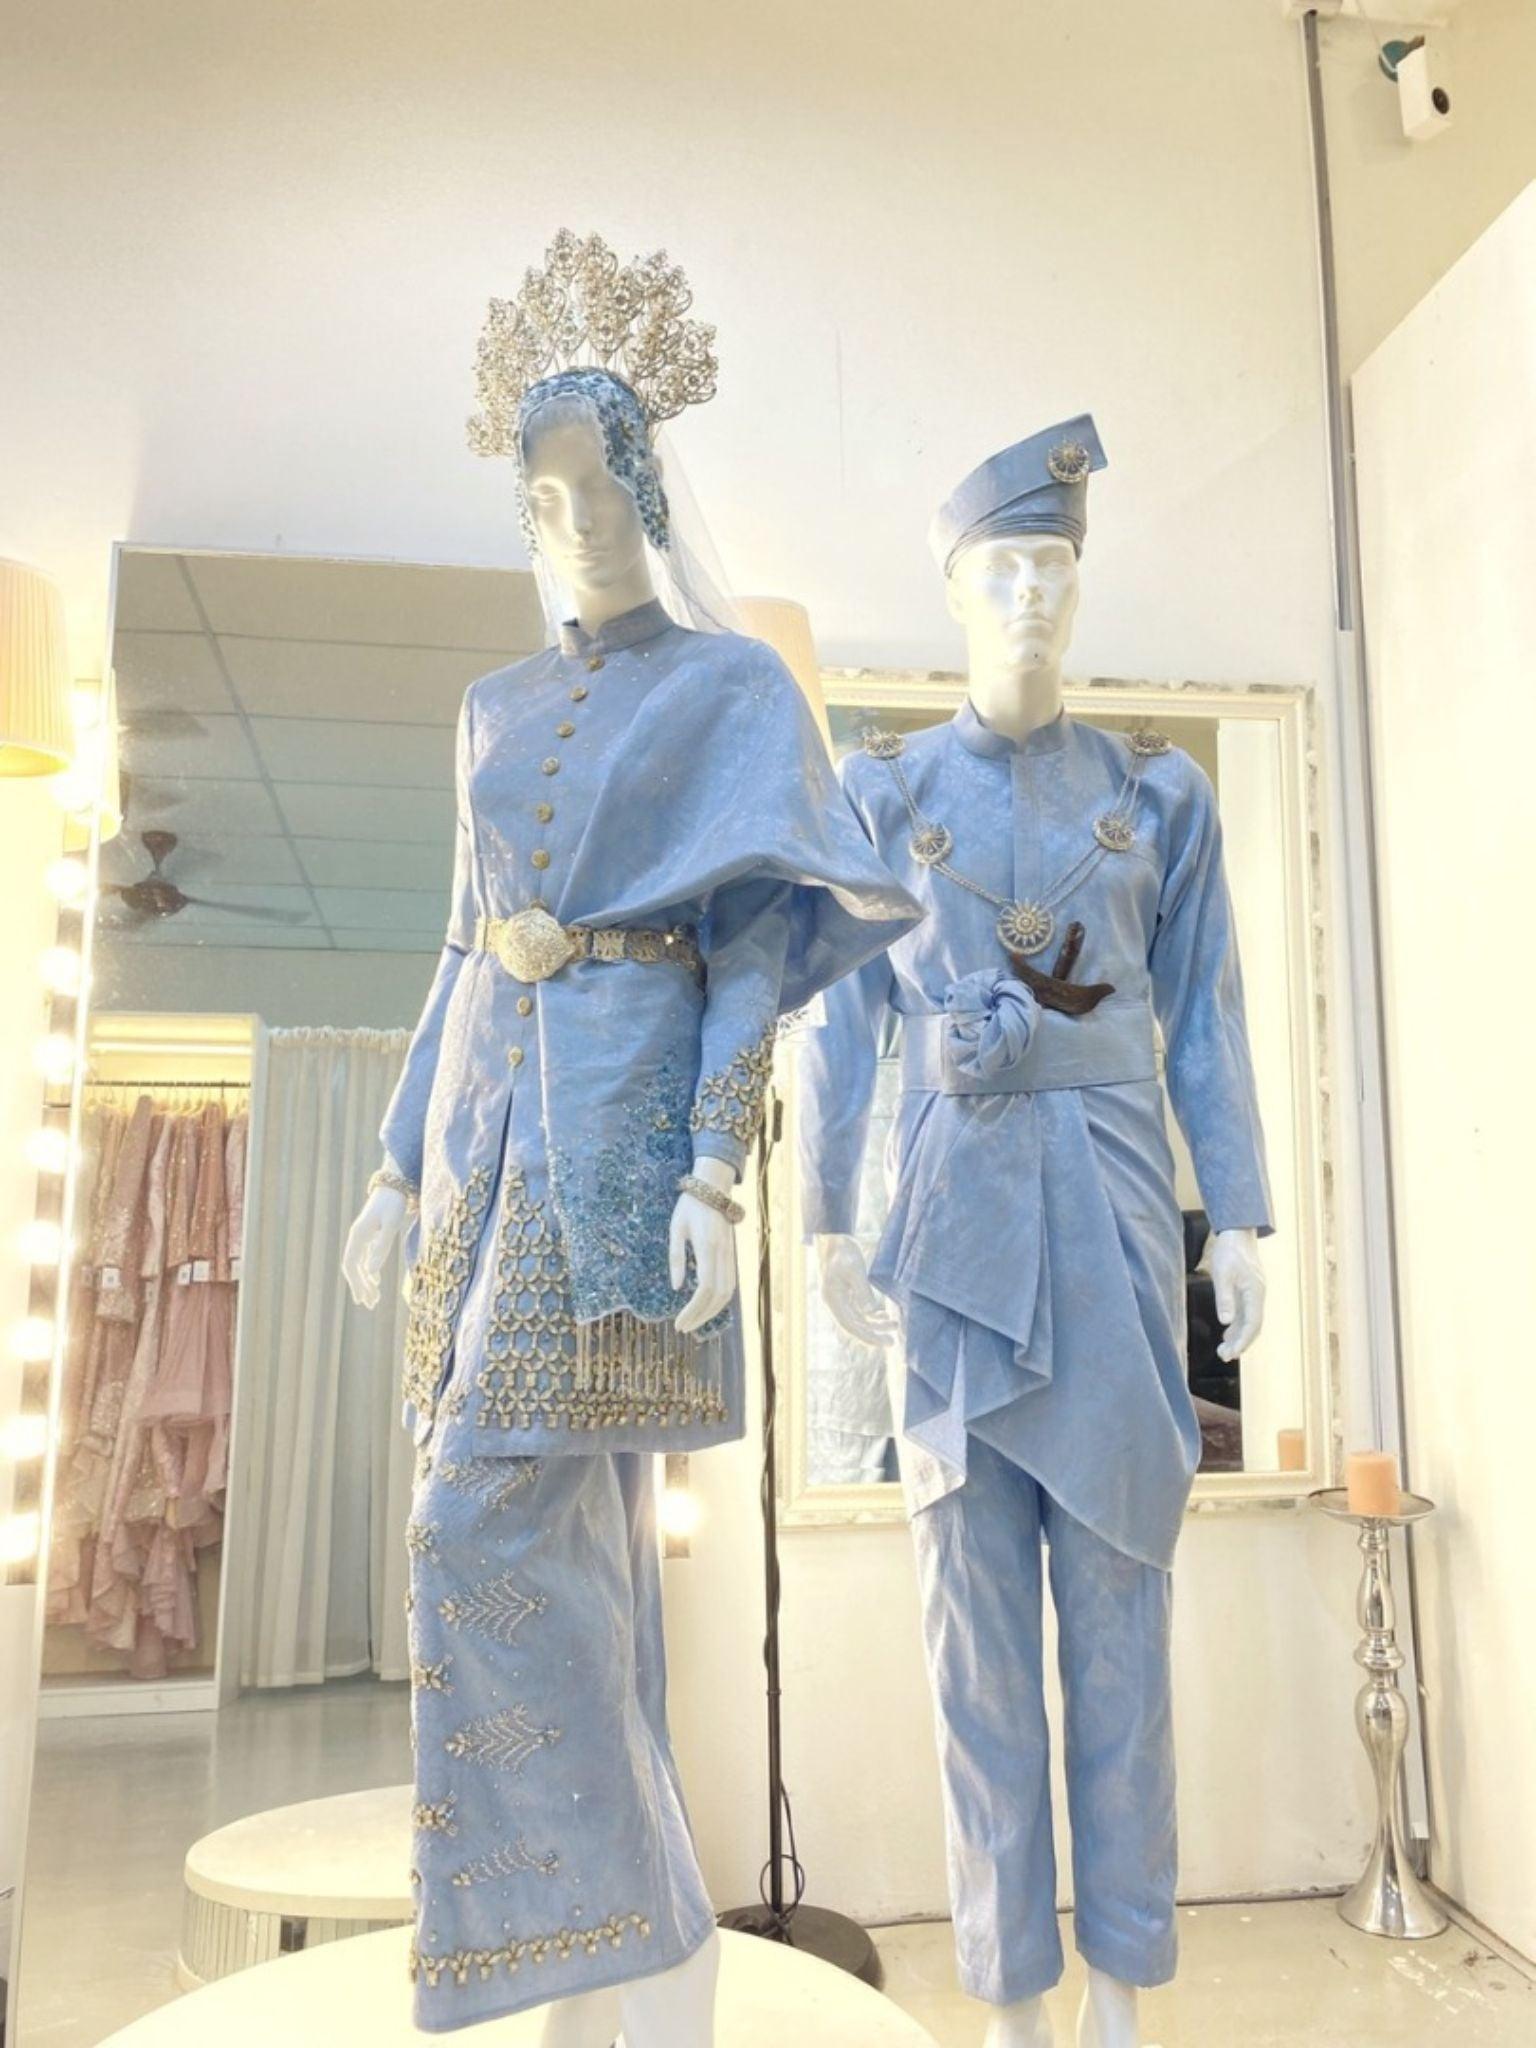 KENCANA - Baju Kurung Belah Songket Wedding Dress, Icy Blue and Silver from PP Signature Bridal Boutique. Tempah Baju Pengantin online-sewa baju pengantin